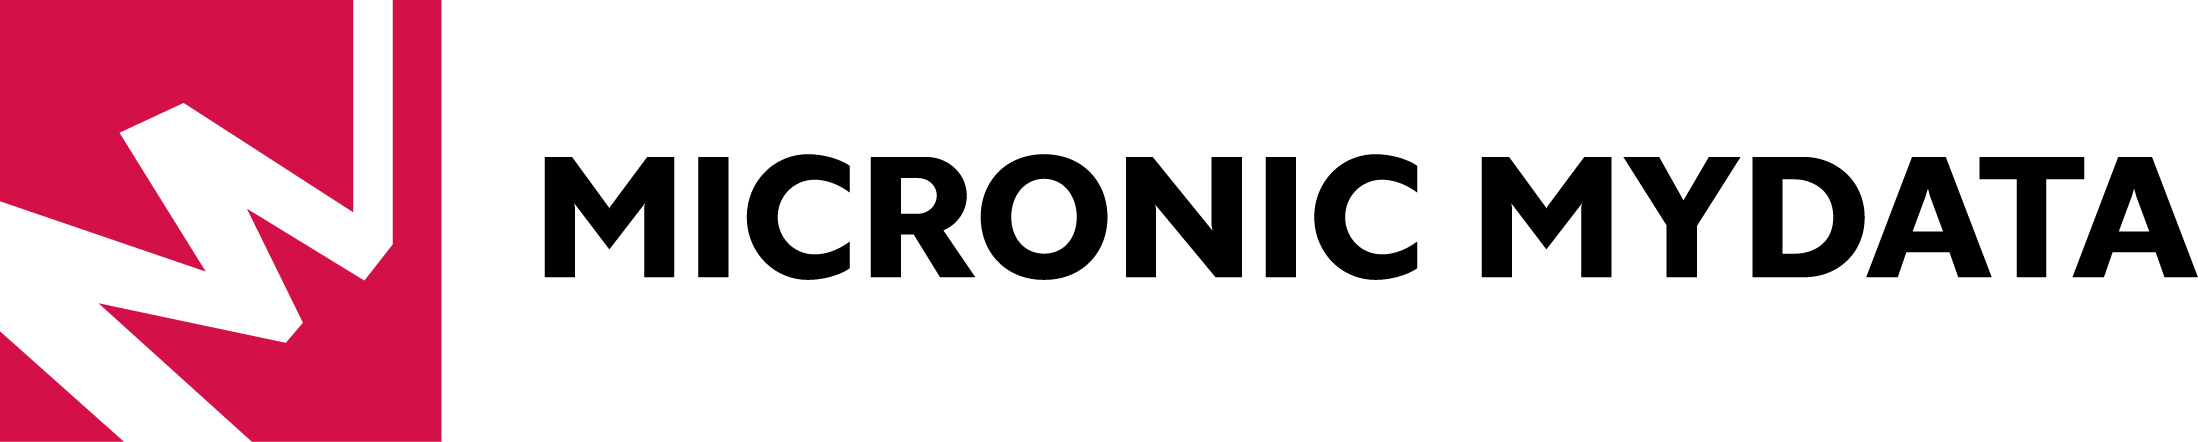 Micronic Logo photo - 1